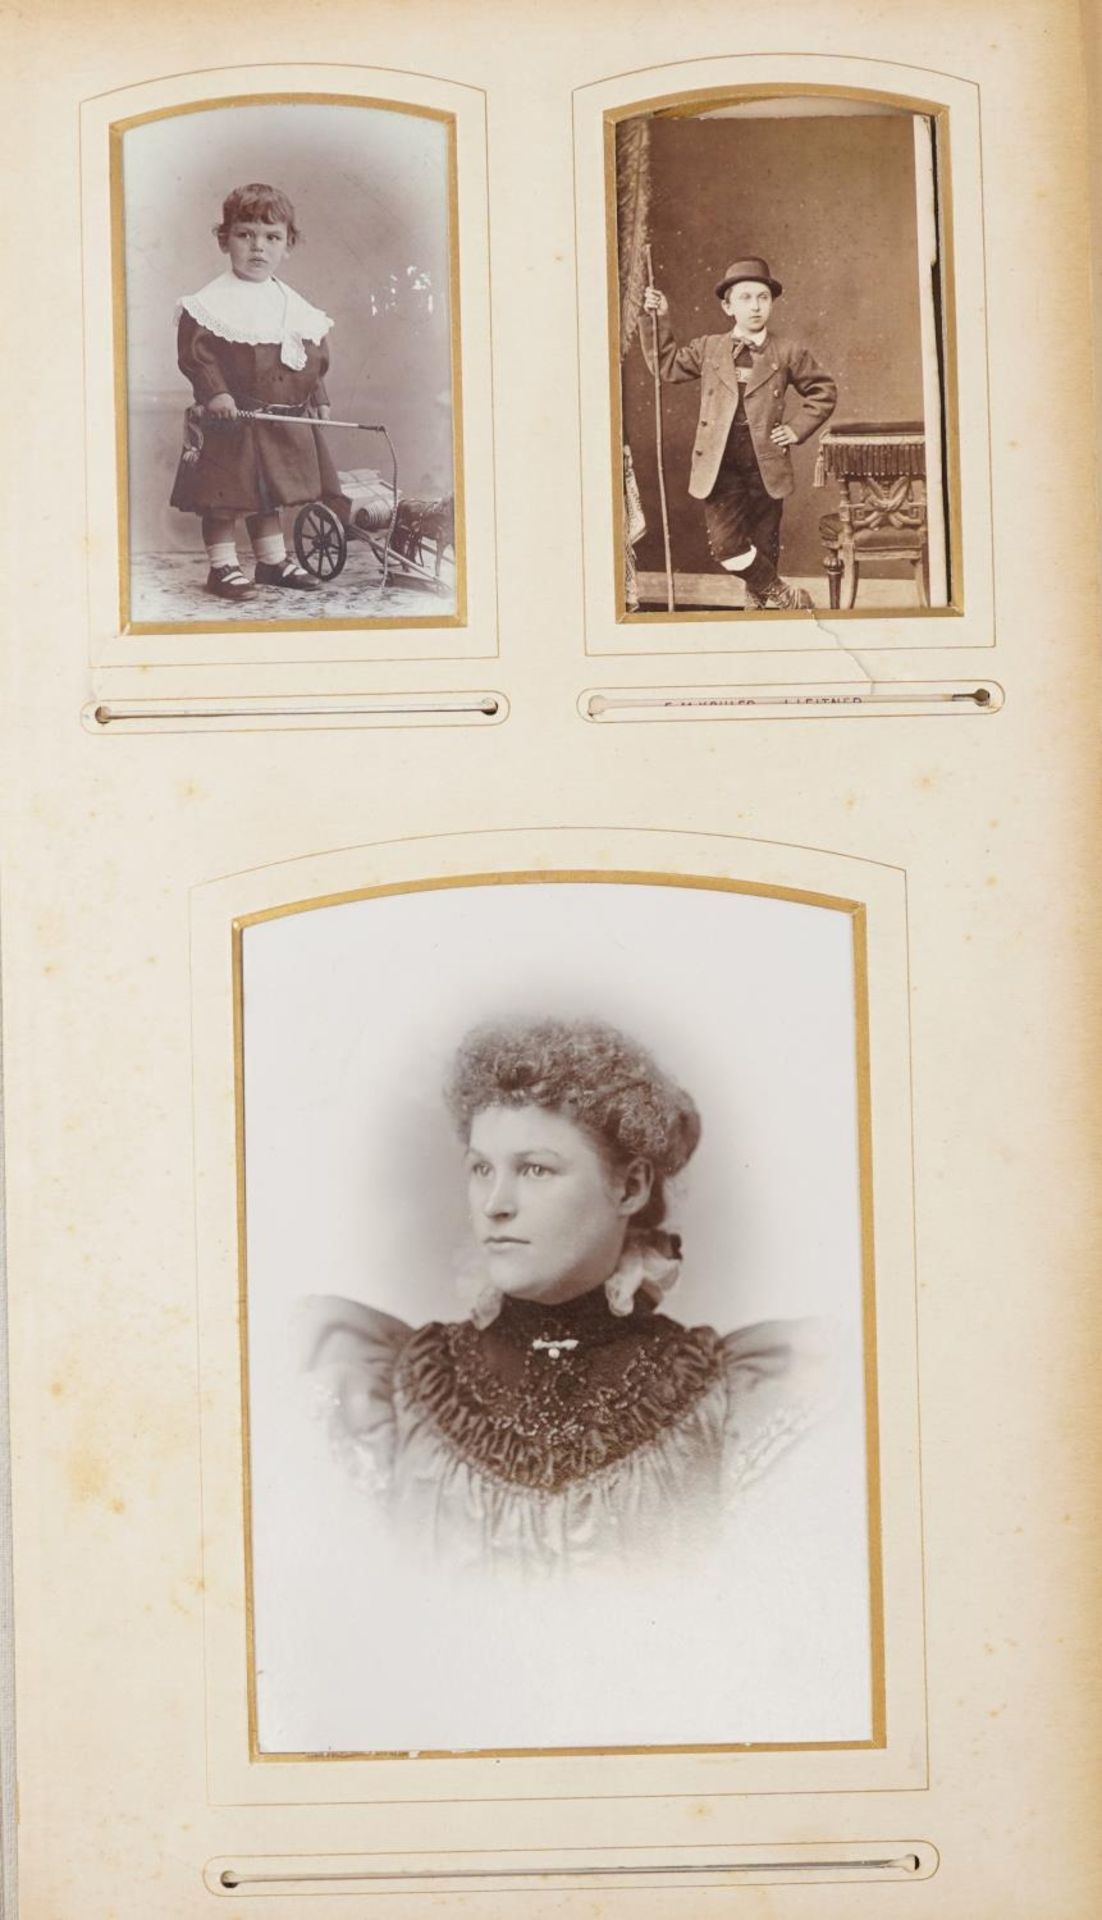 Victorian cabinet cards and cartes de visite photographs arranged in an Art Nouveau leather album - Image 2 of 6